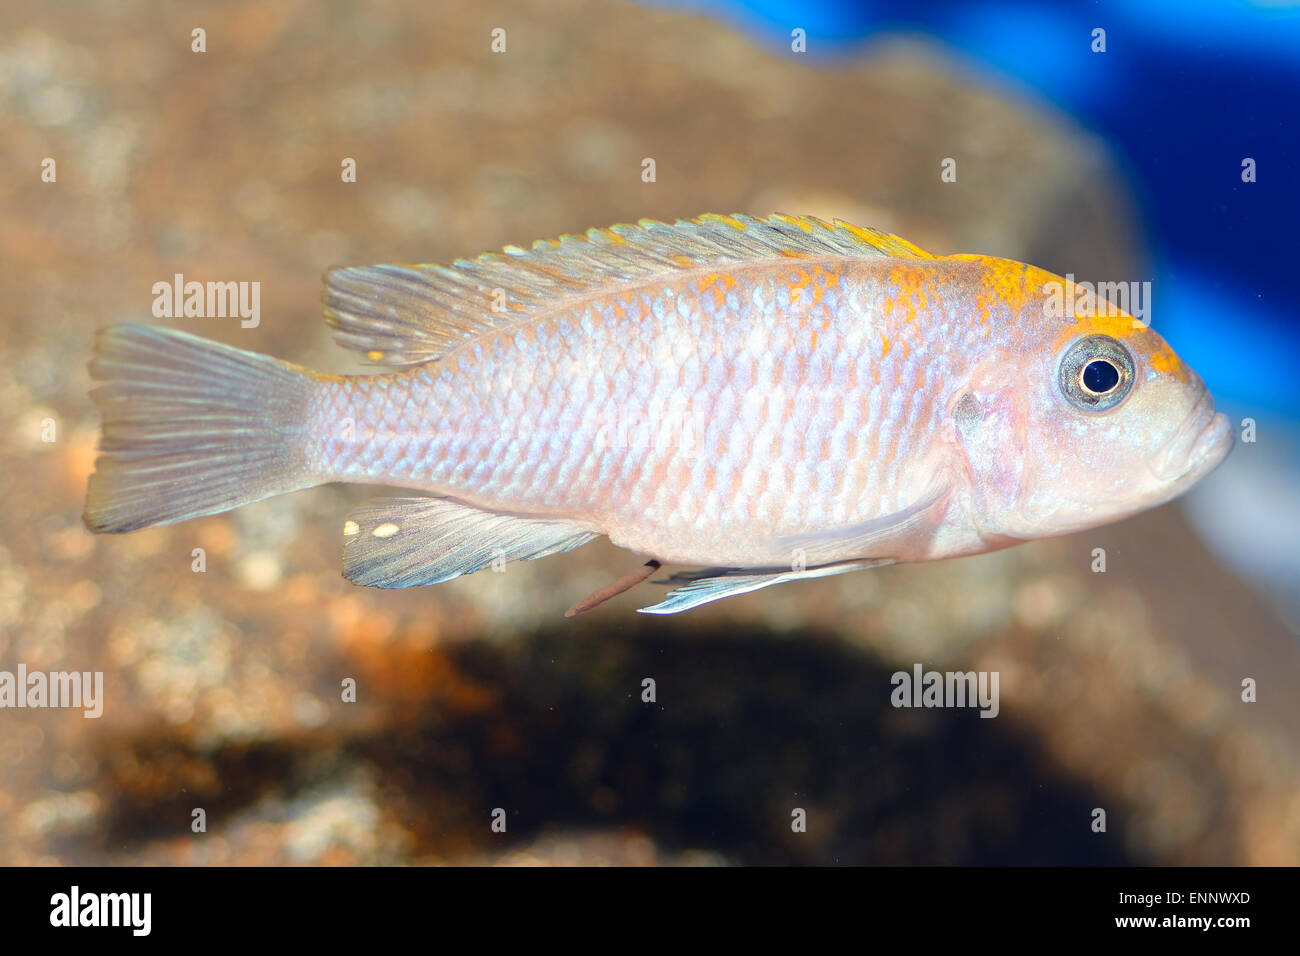 Nice blue cichlid fish from genus Pseudotropheus. Stock Photo